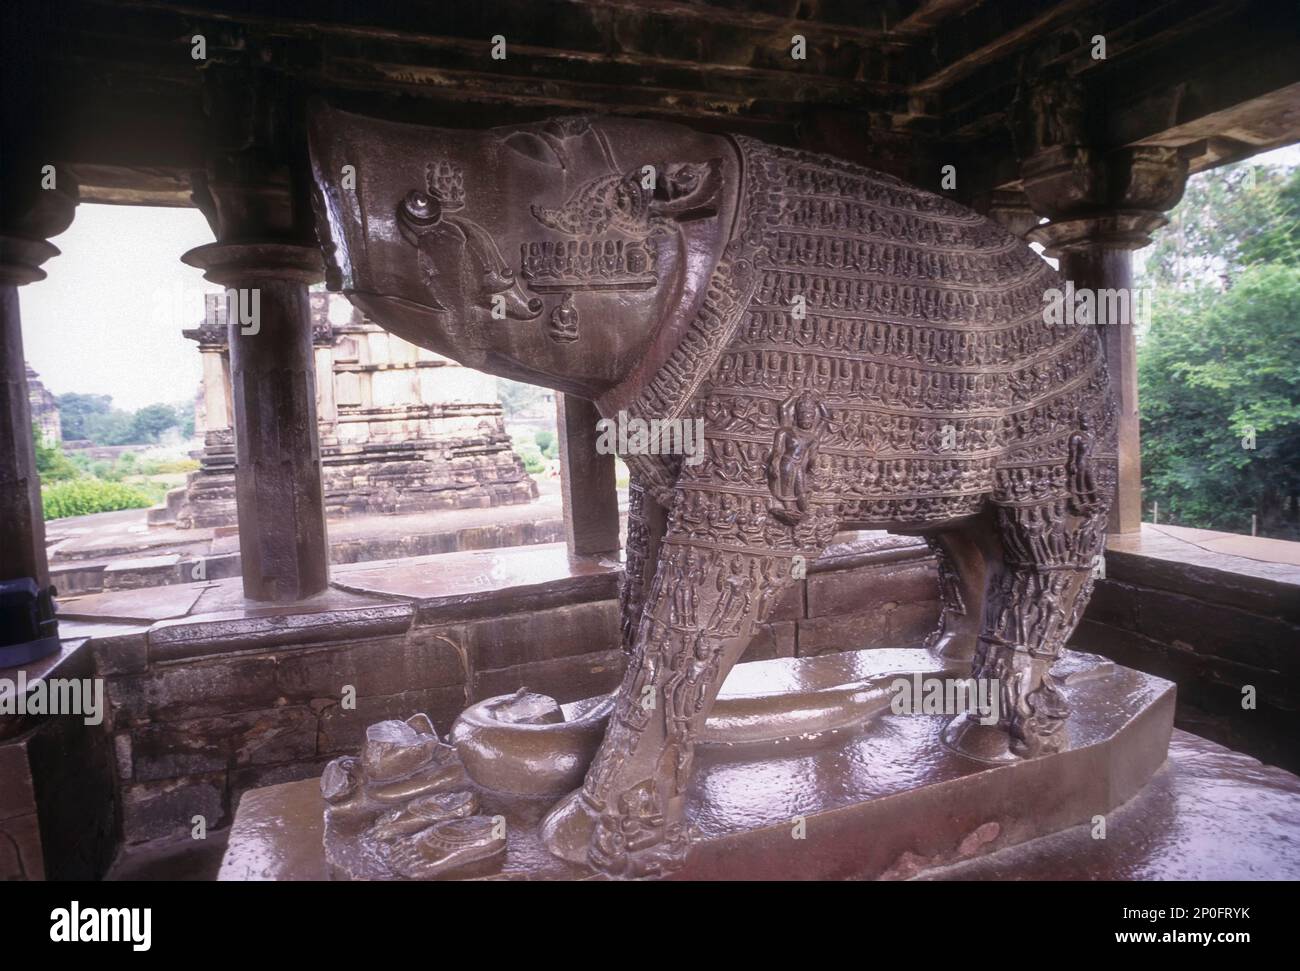 Statue of Varaha the third Avatar Incarnation of the Hindu god Vishnu in the form of a Boar, Varaha temple at Khajuraho, Madhya Pradesh, India. This Stock Photo